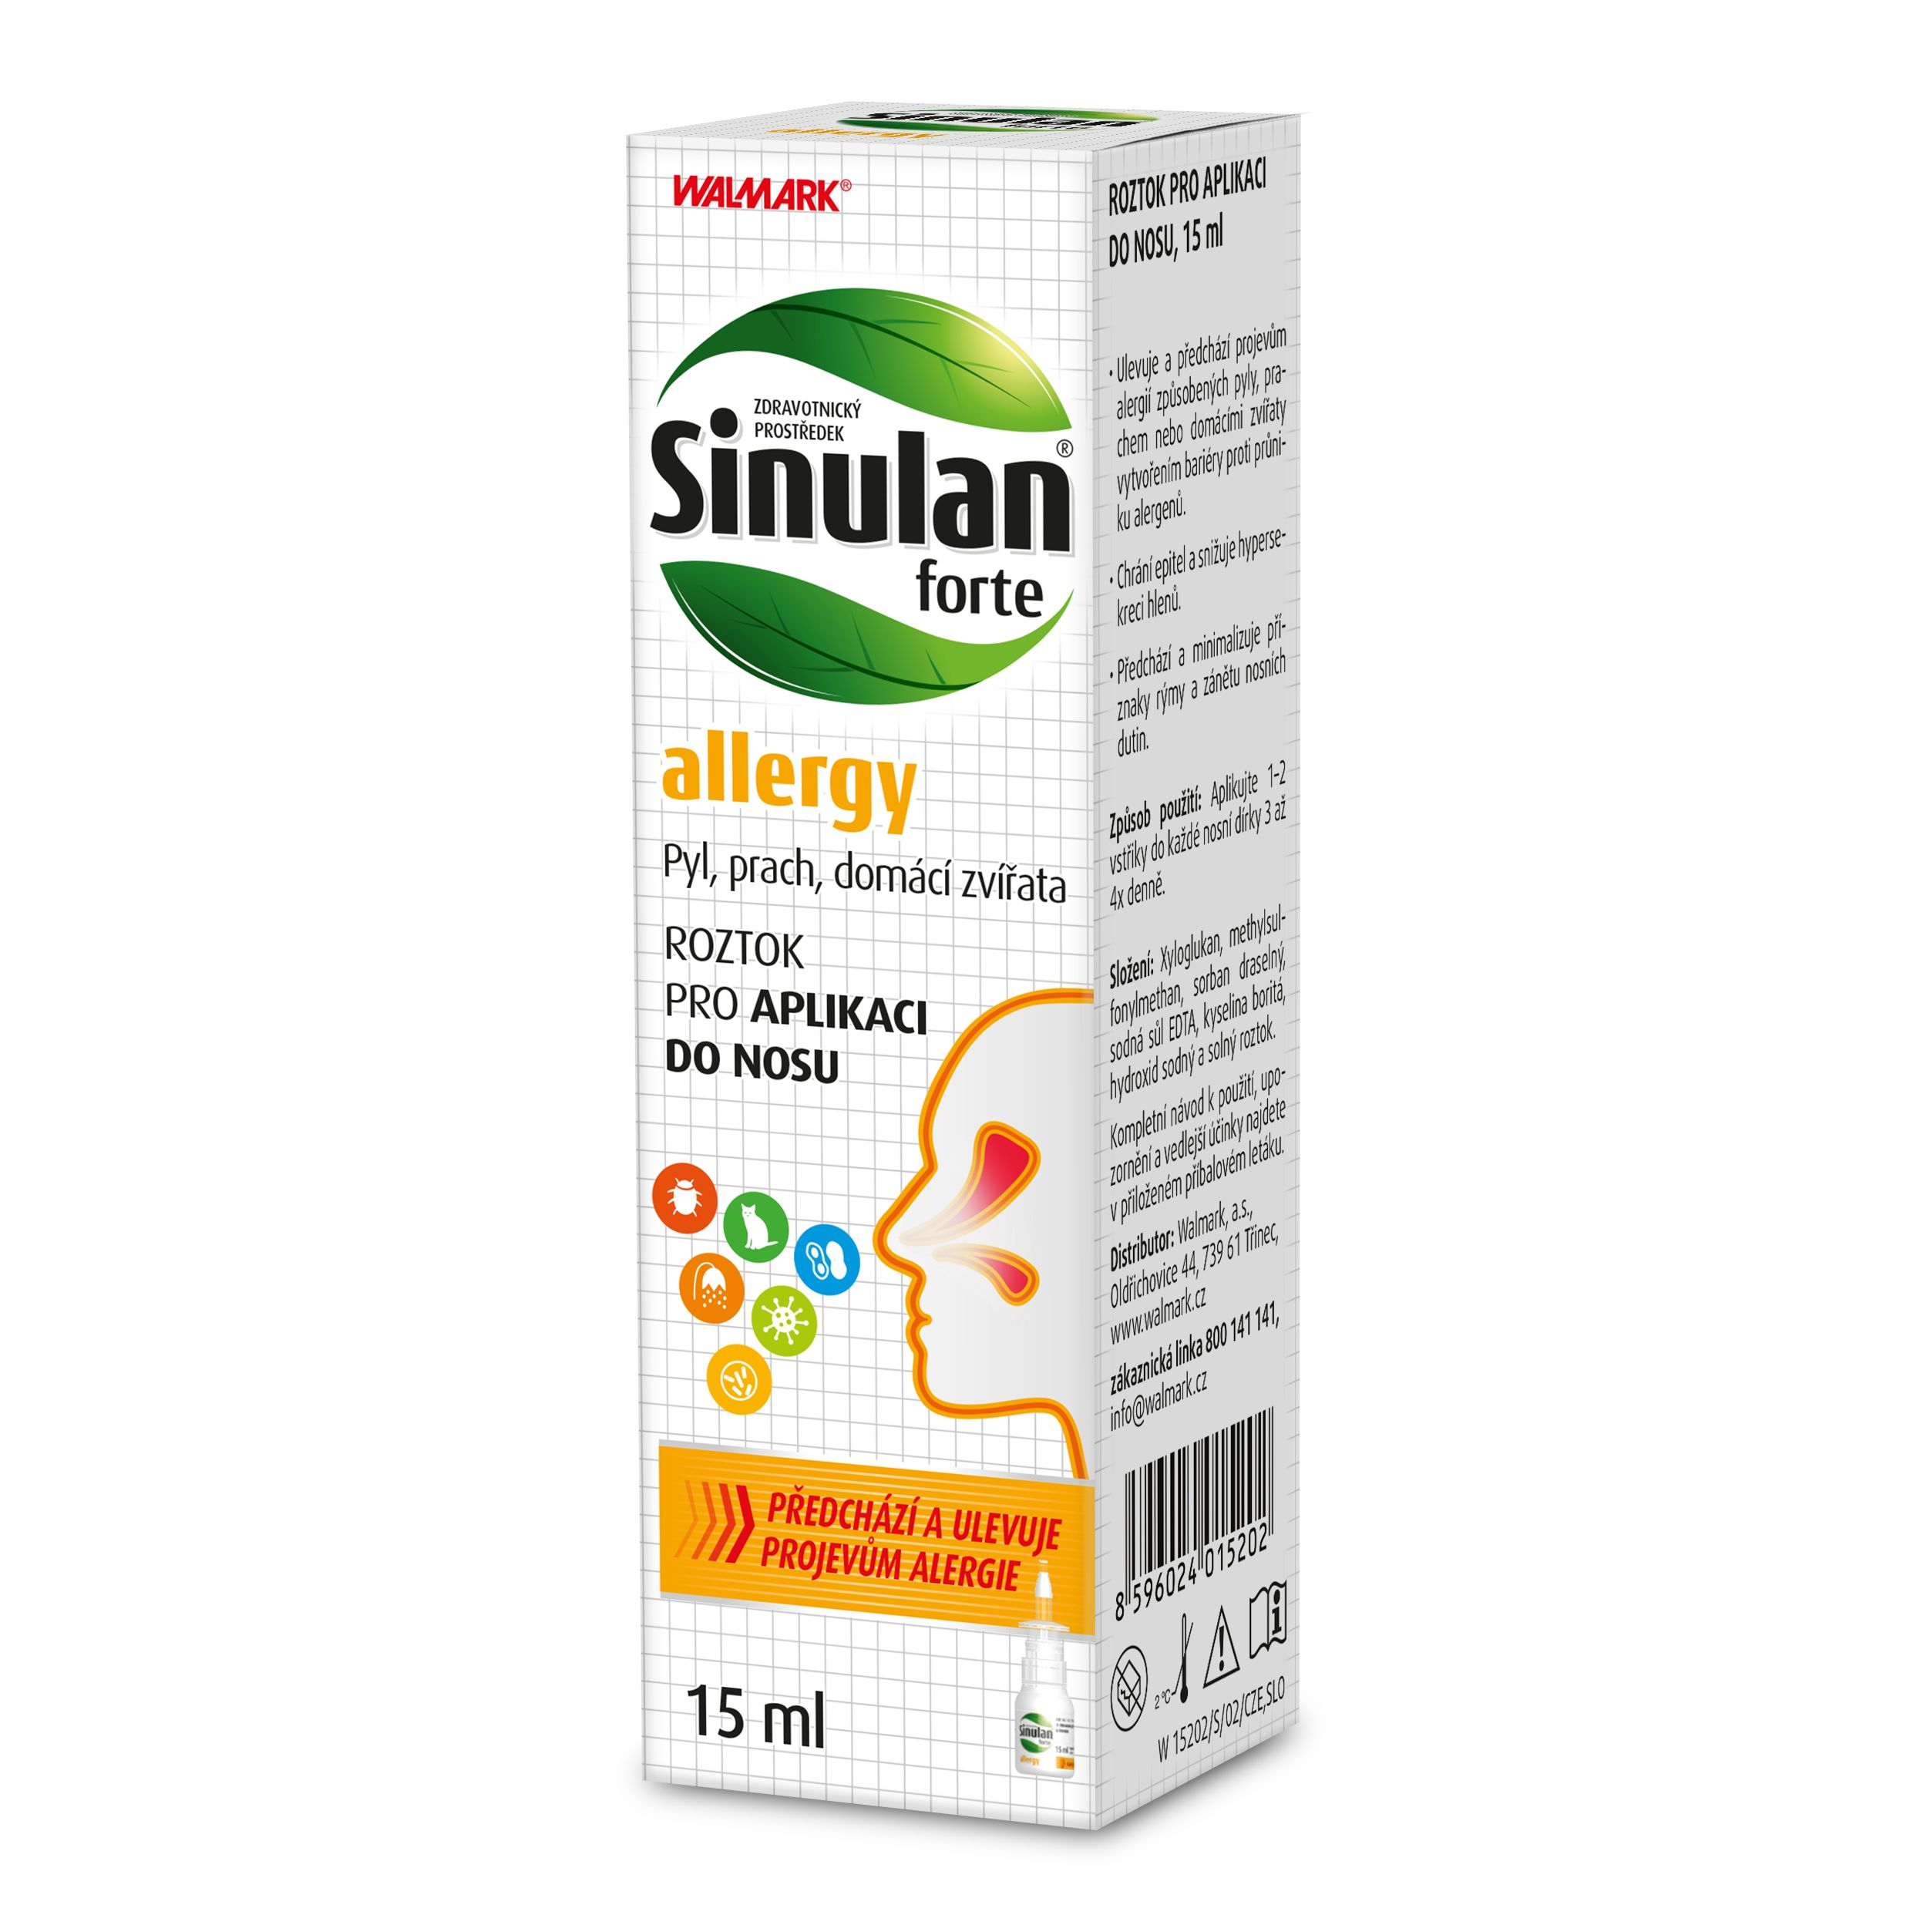 Walmark Sinulan forte allergy nosní sprej 15 ml Walmark